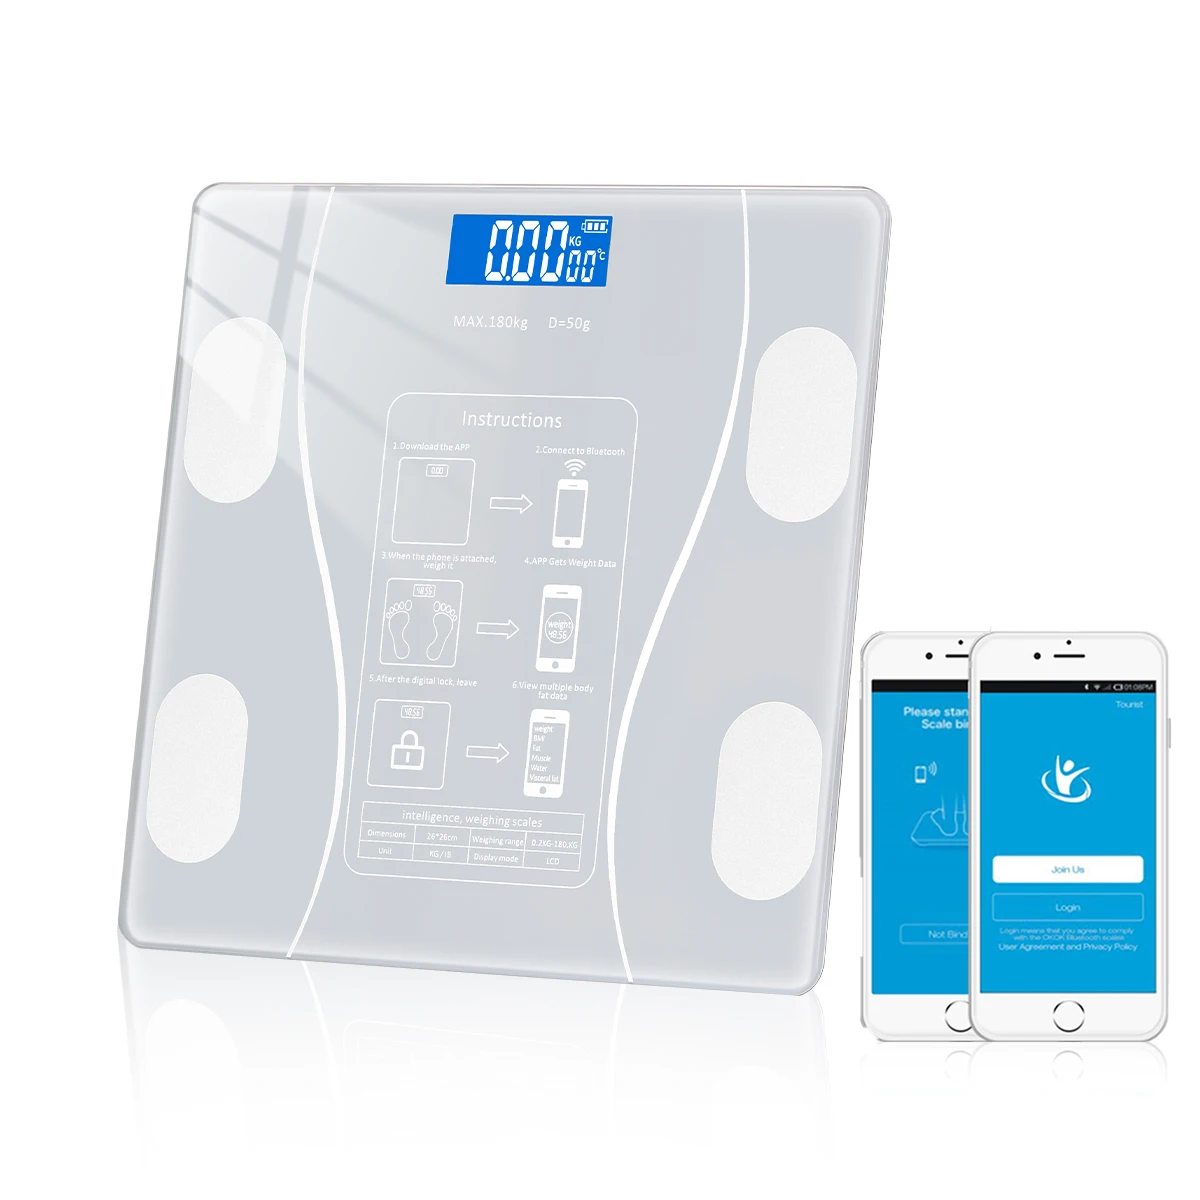 https://ae01.alicdn.com/kf/H6da4c8c0e58d4ecb9c0c927bbf8713b6p/Bathroom-Scales-Wireless-Bluetooth-Body-Fat-Scale-Smart-Digital-Weight-Scale-Body-Composition-Analyzer-Body-Weighing.jpg